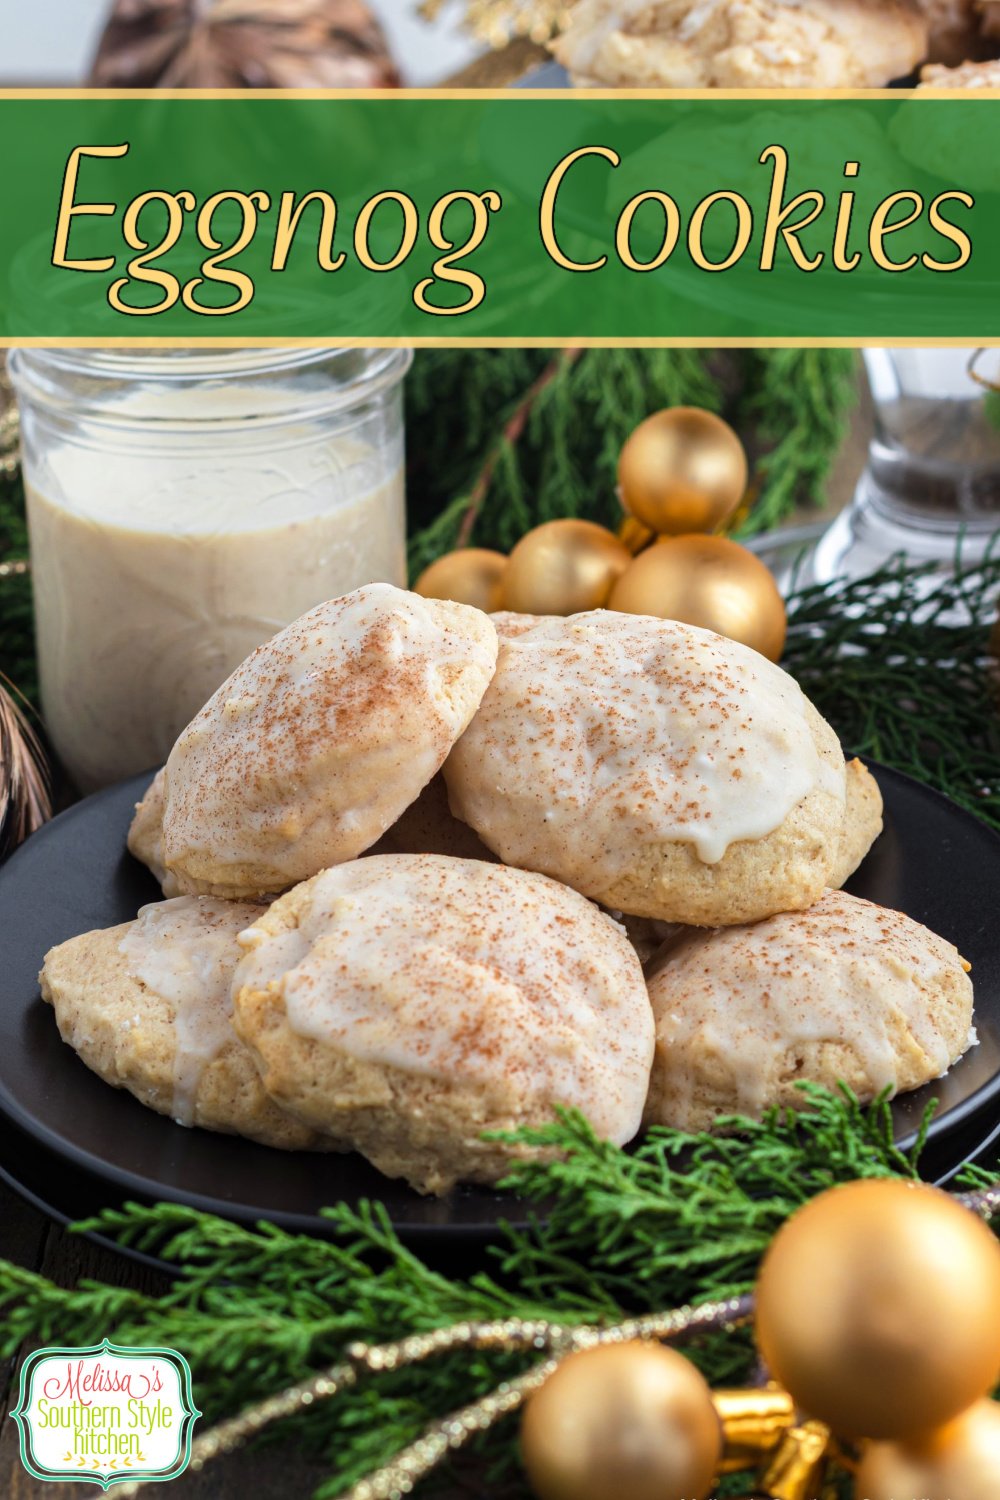 Add these eggnog glazed homemade Eggnog Cookies to your holiday and Christmas cookies menu for a decadent handheld eggnog treat. #eggnog #eggnogcookies #christmascookies #cookierecipes #eggnogrecipes #wintercookies via @melissasssk